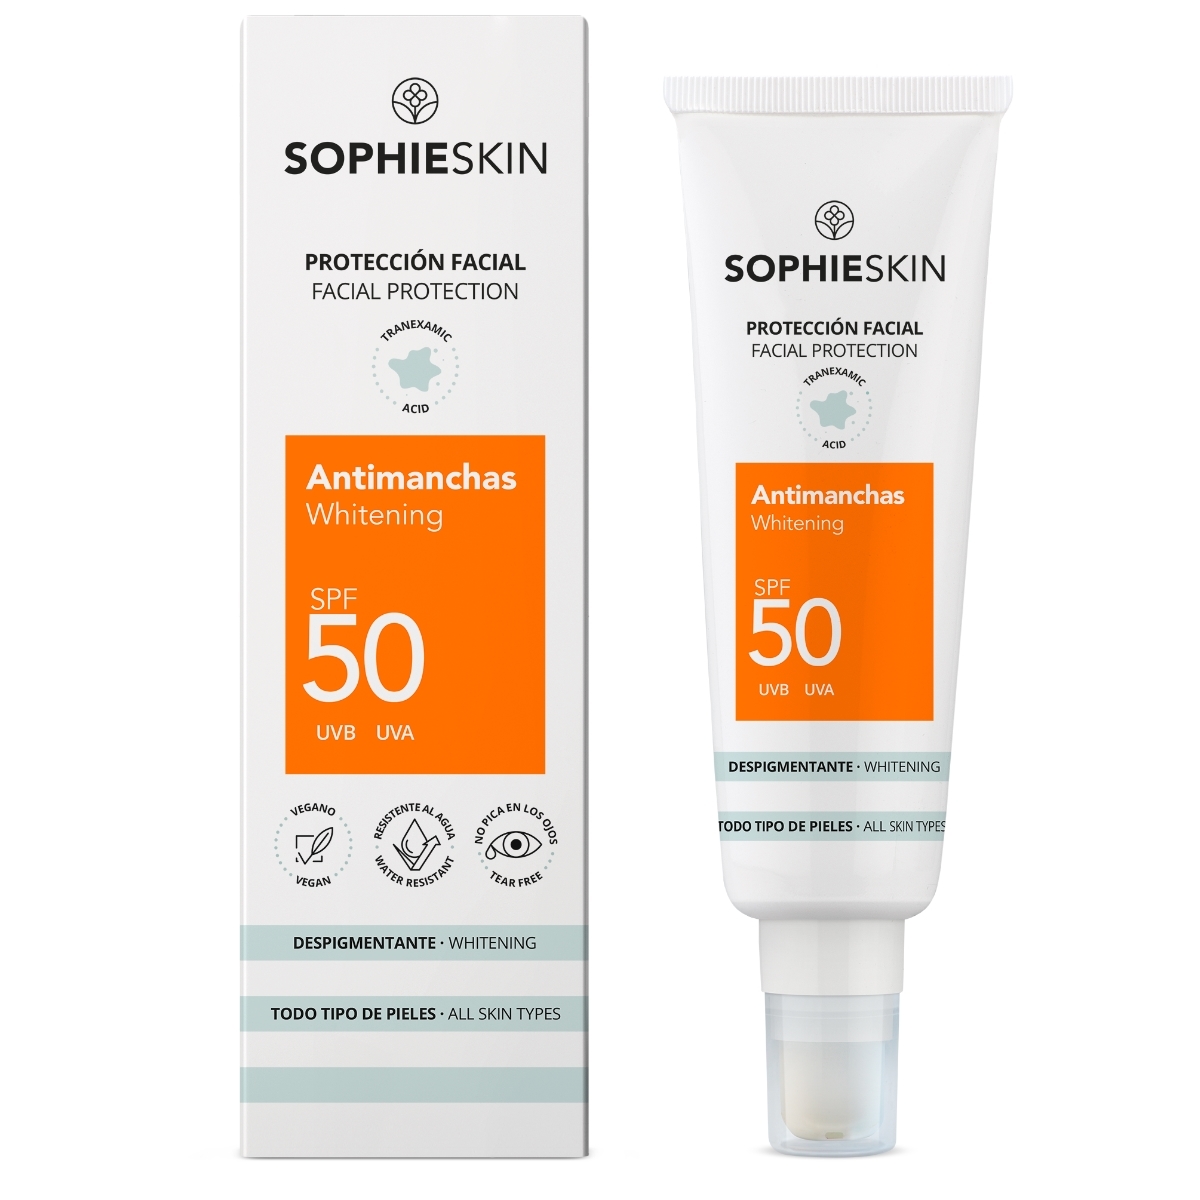 Protector facial antimanchas SPF 50+ de Sophieskin.